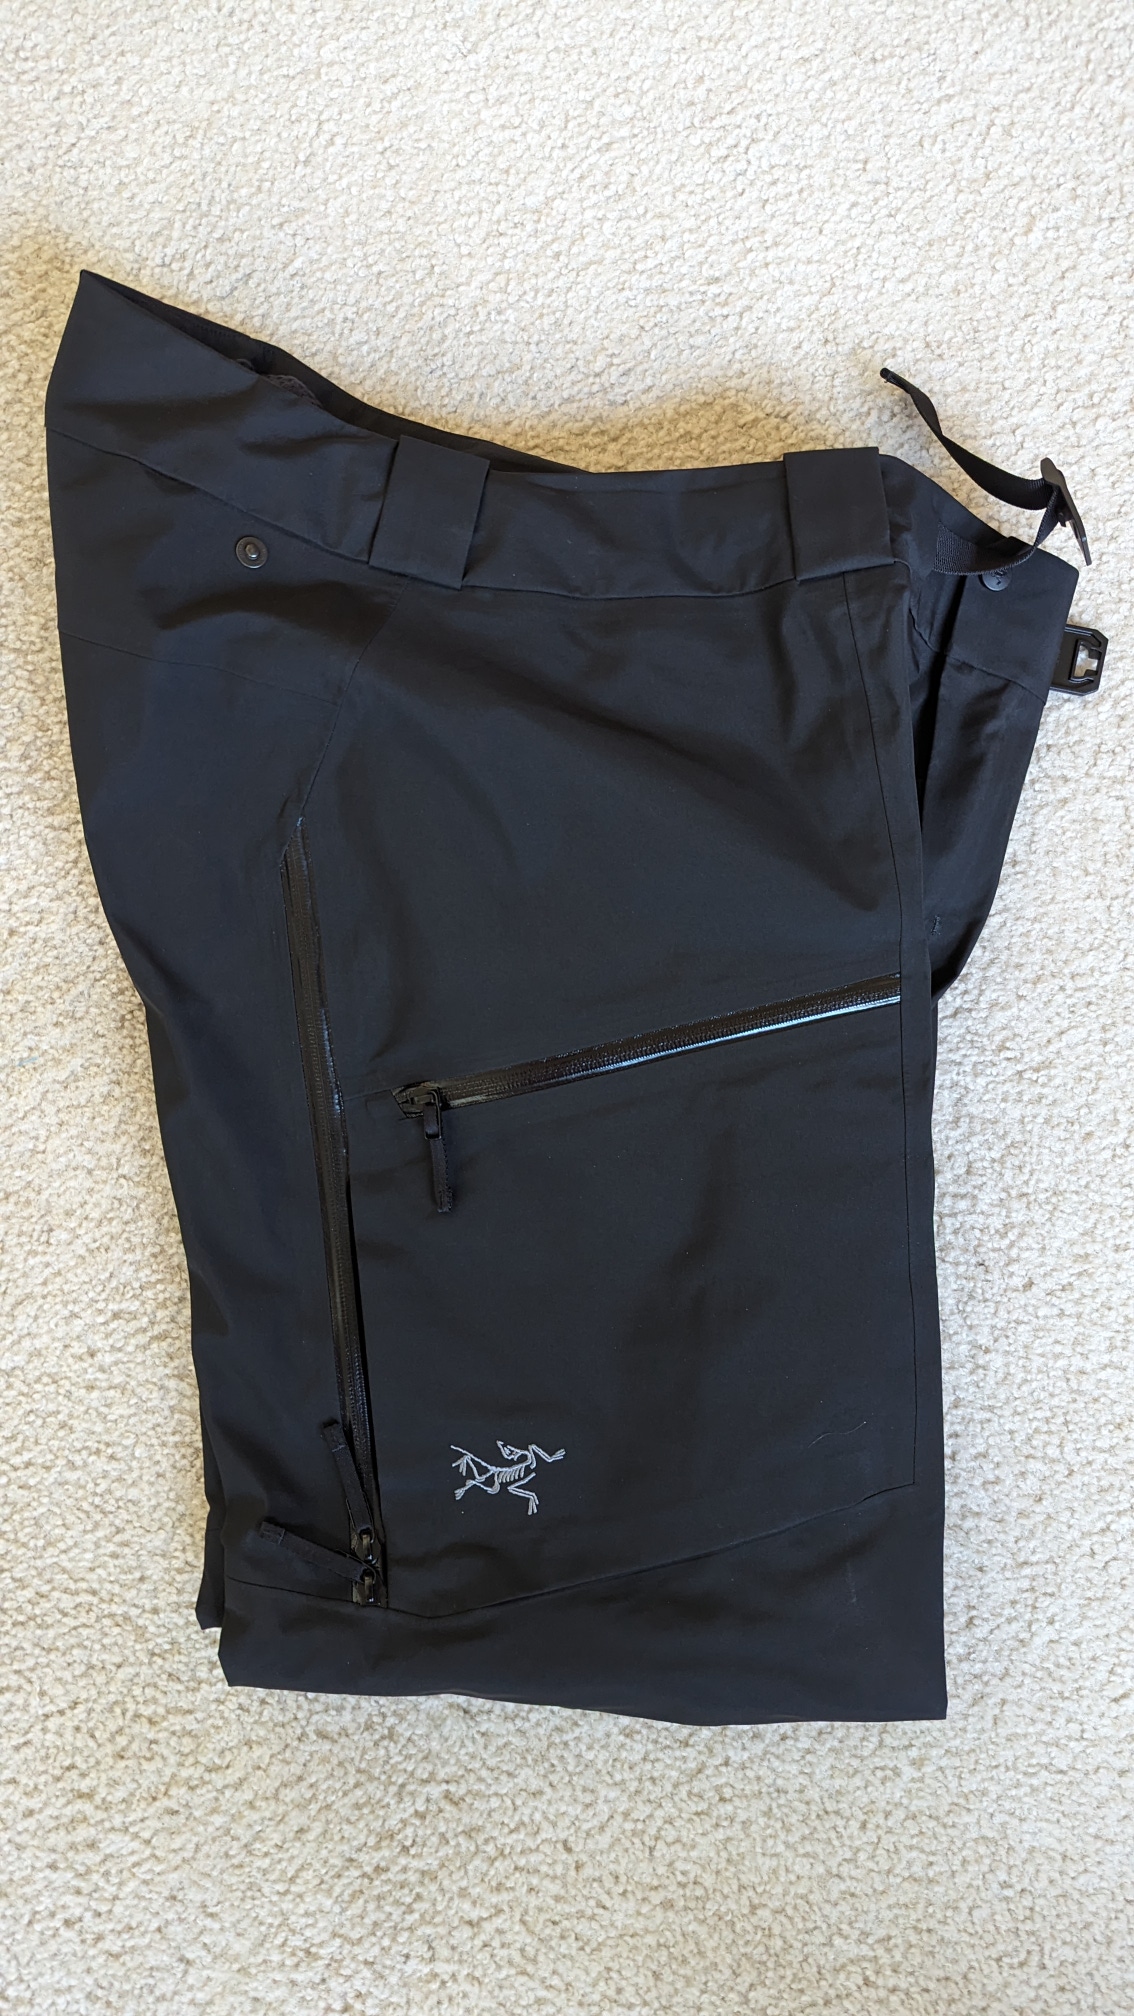 Arc'teryx Sabre Pants - Men's - Black - New WITHOUT TAGS - Large SHORT - inseam 31"